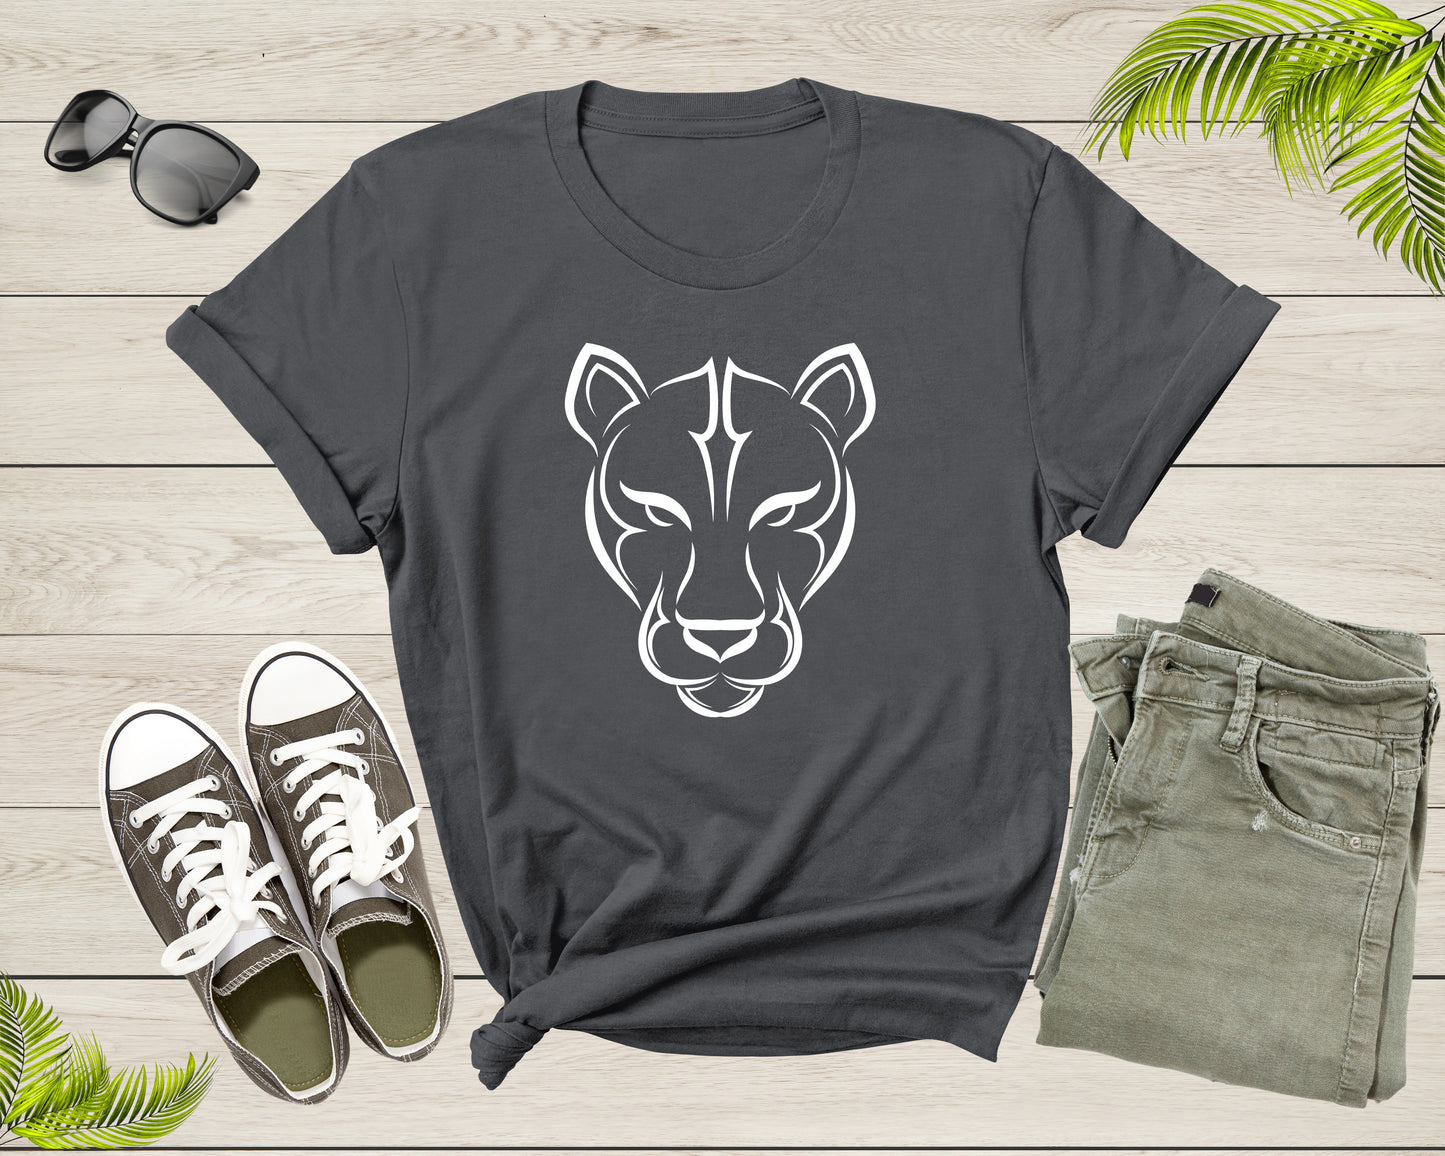 Cool Cougar Tiger Cheetah Puma Wild Cat Animal Head Face T-Shirt Puma Cougar Shirt for Men Women Kids Boys Girls Teens Graphic Gift Tshirt